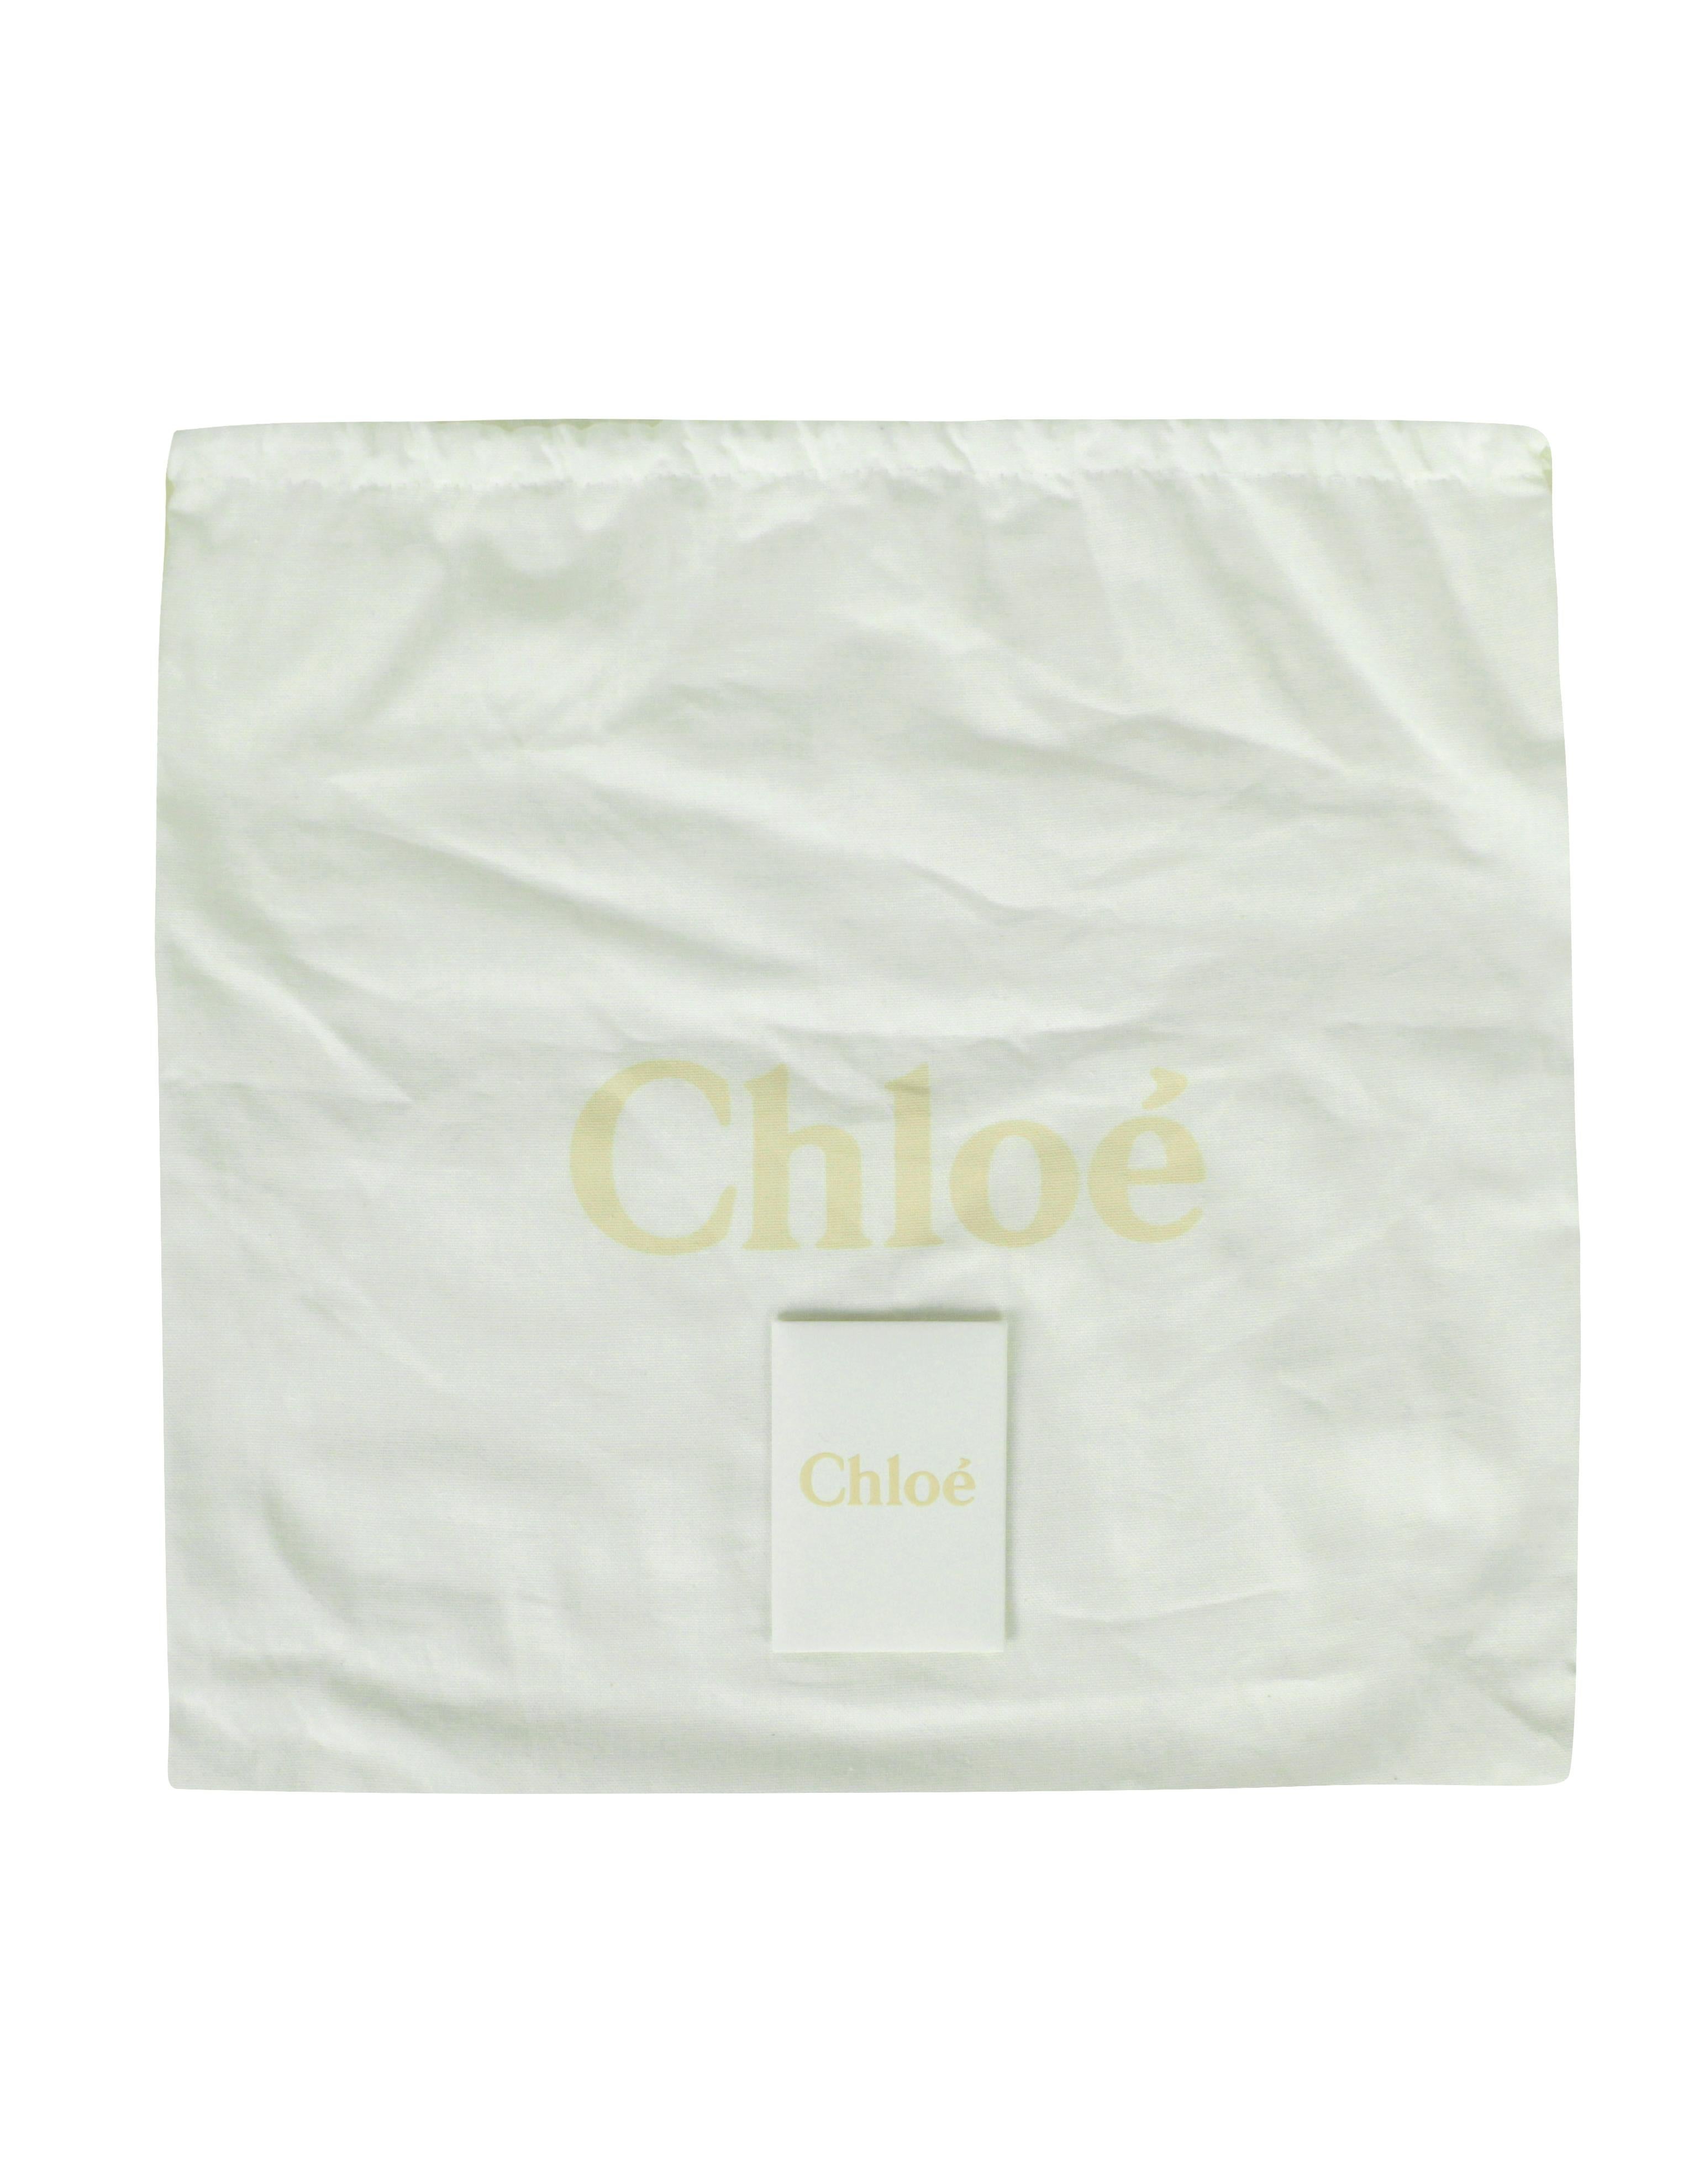 Chloe Soft Tan Leder Medium Marcie Satchel Crossbody Tasche 6